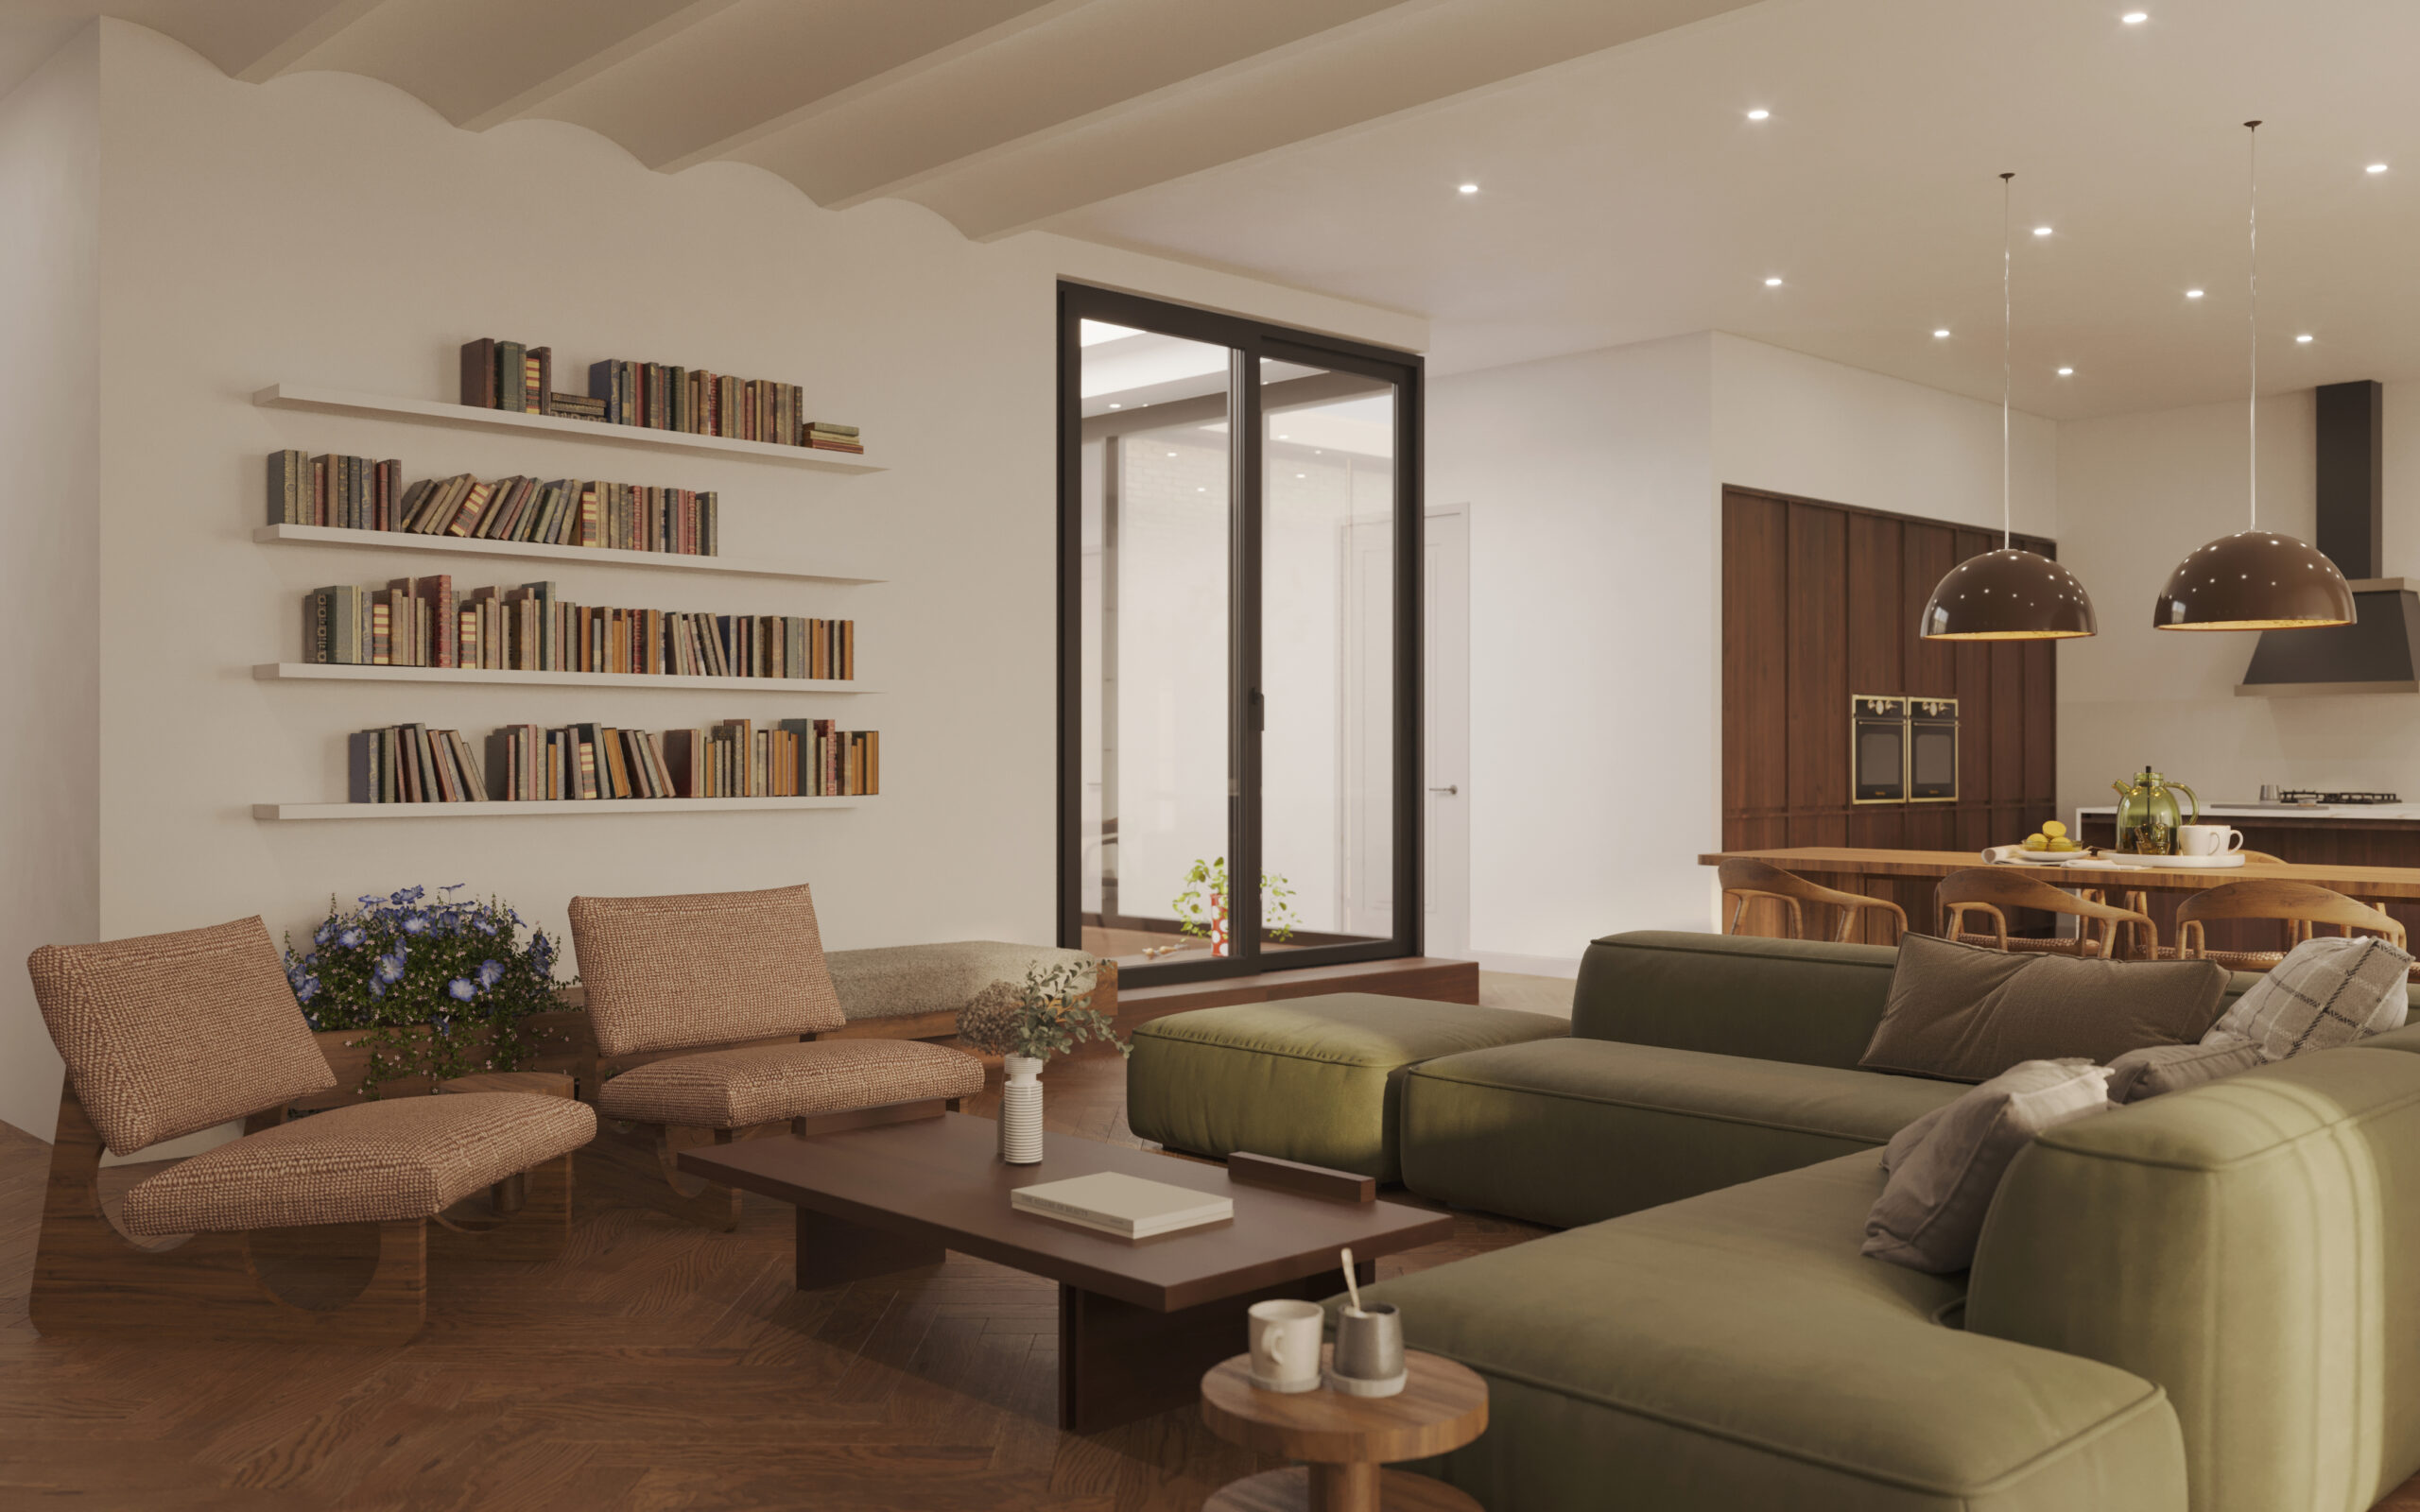 living room interior design in light colours, shelves, sofas and books